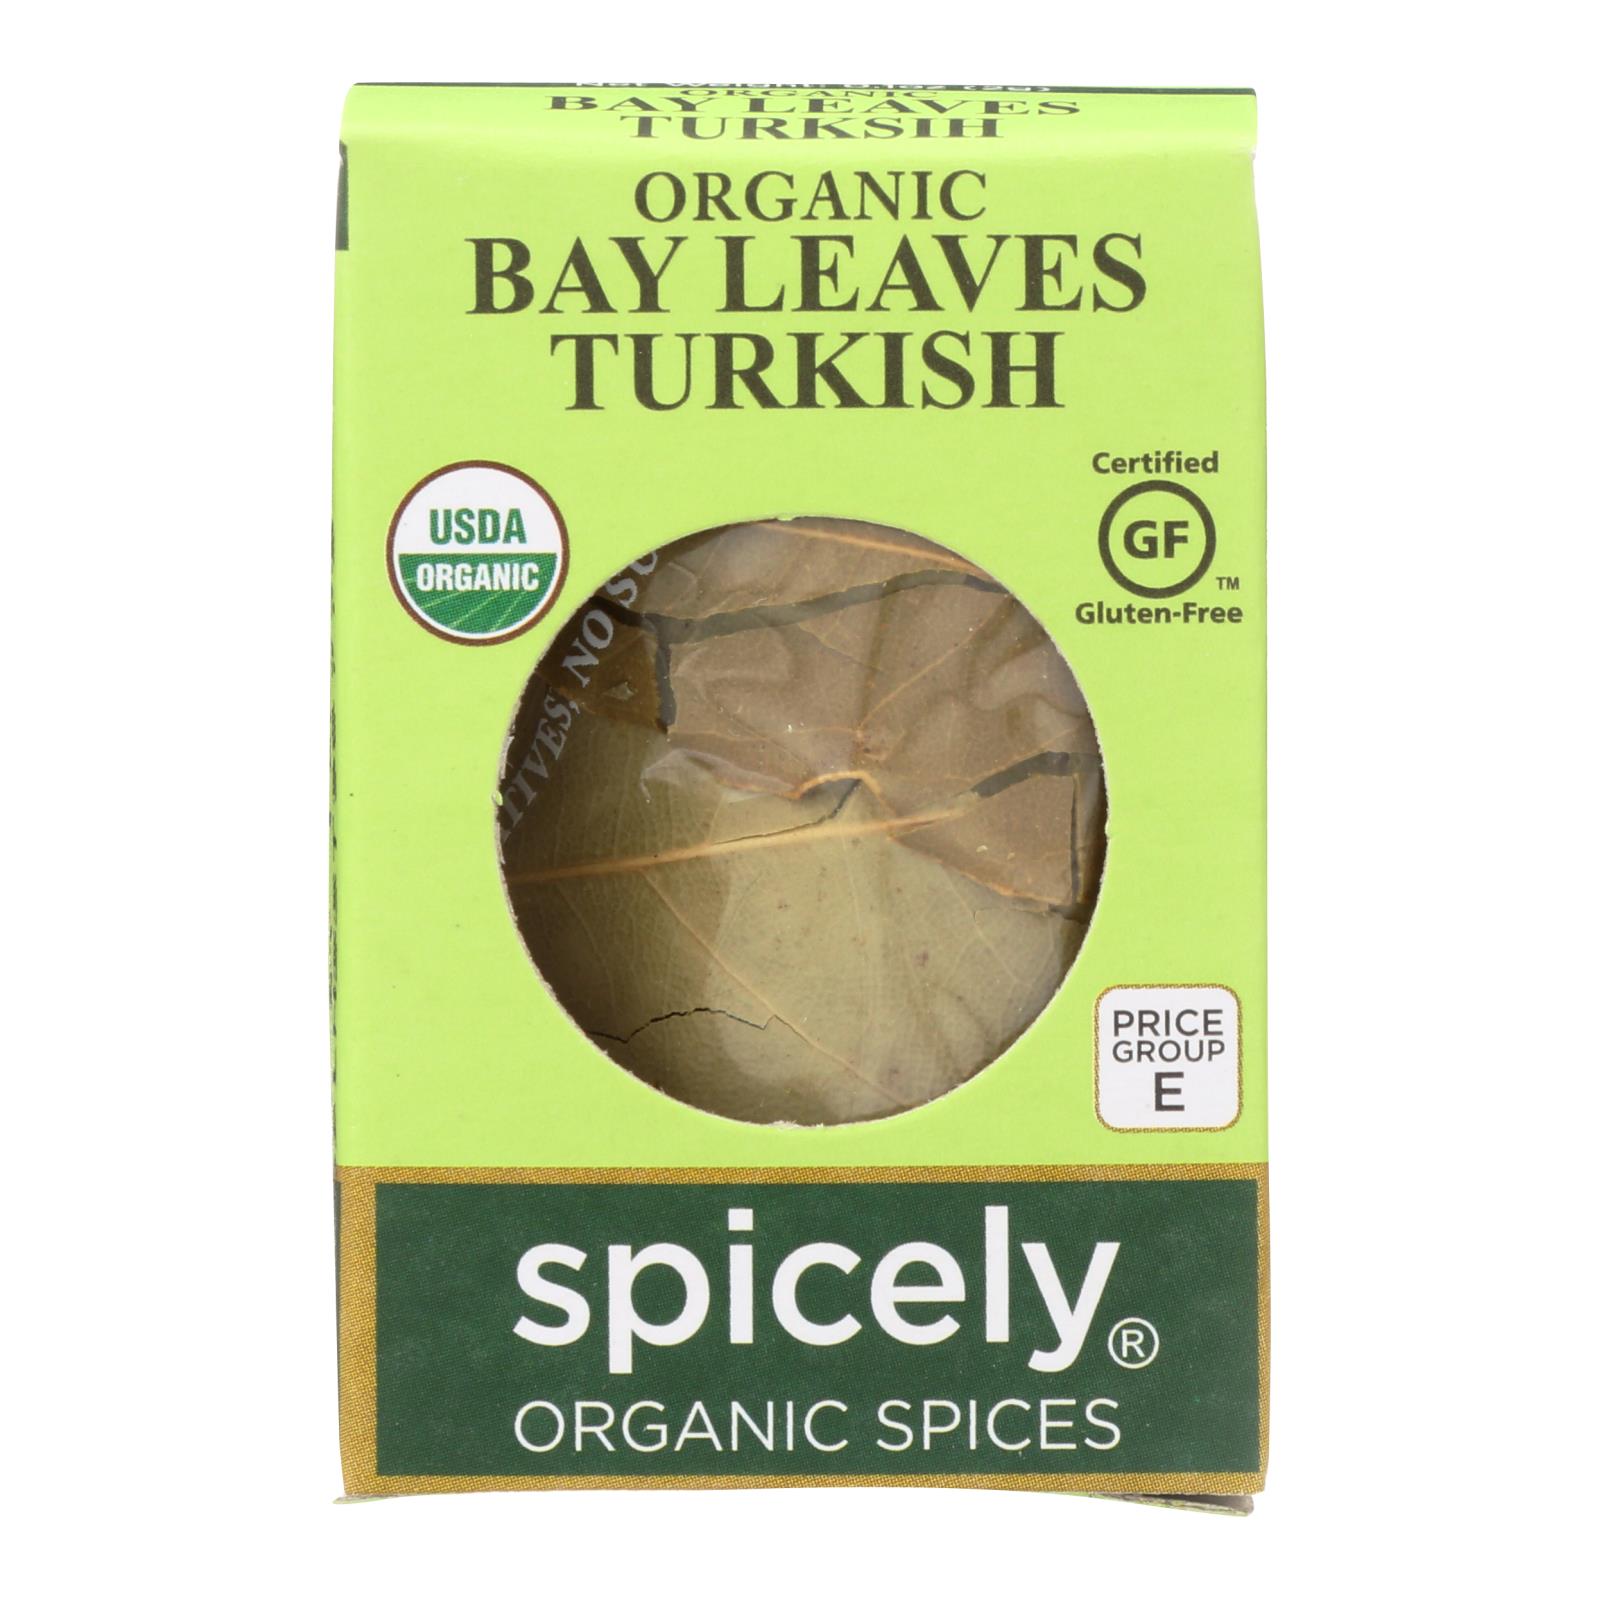 Spicely Organics - Organic Bay Leaves - Turkish Whole - 6개 묶음상품 - 0.1 oz.